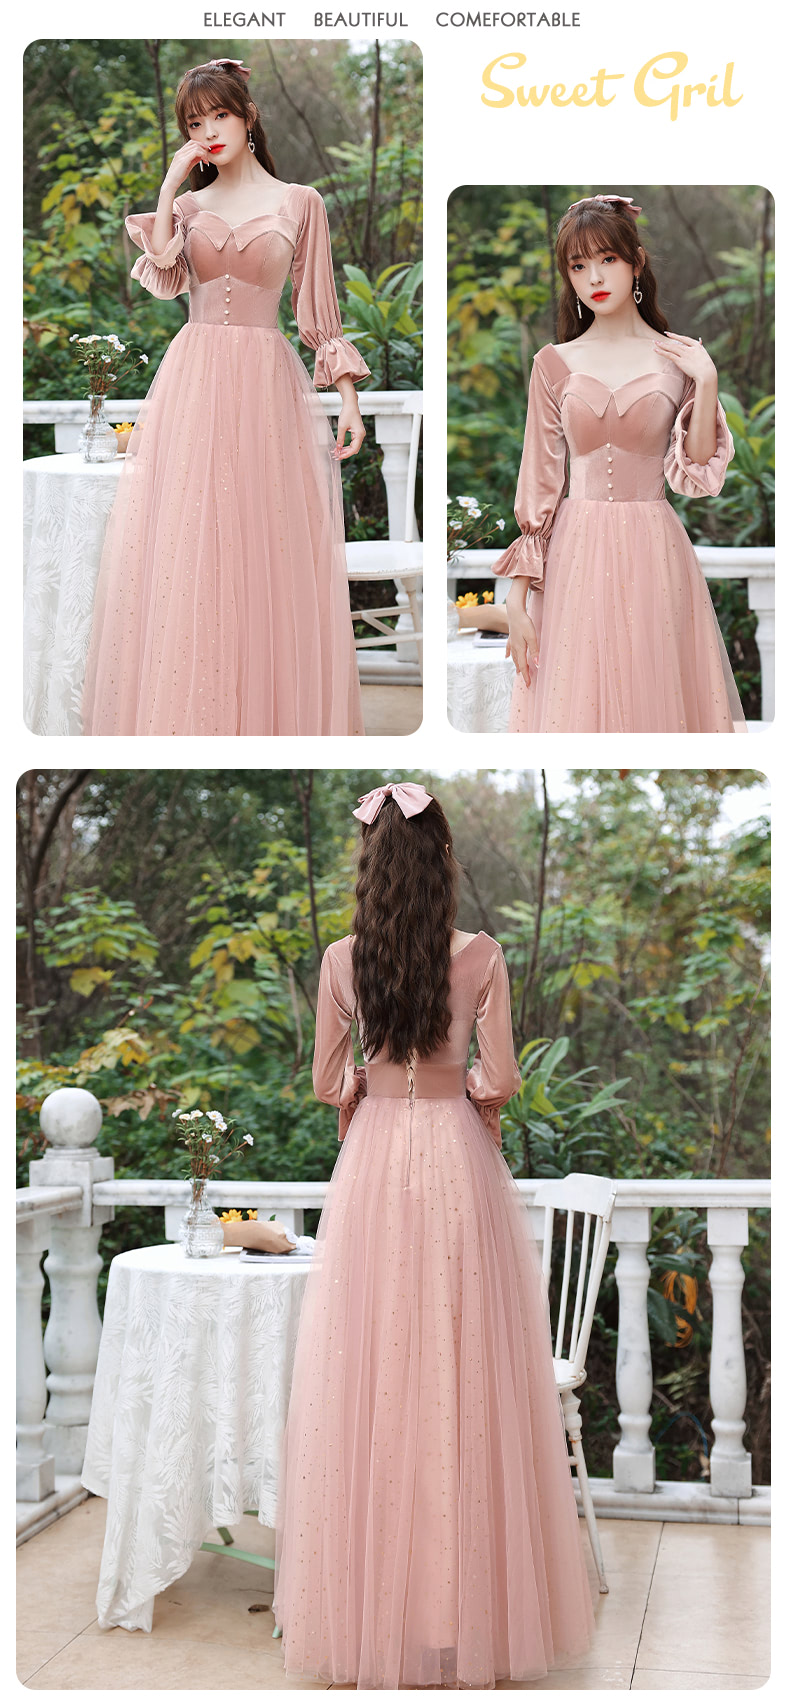 Long-Sleeve-Velvet-Bridesmaid-Dress-Wedding-Guest-Formal-Gown23.jpg